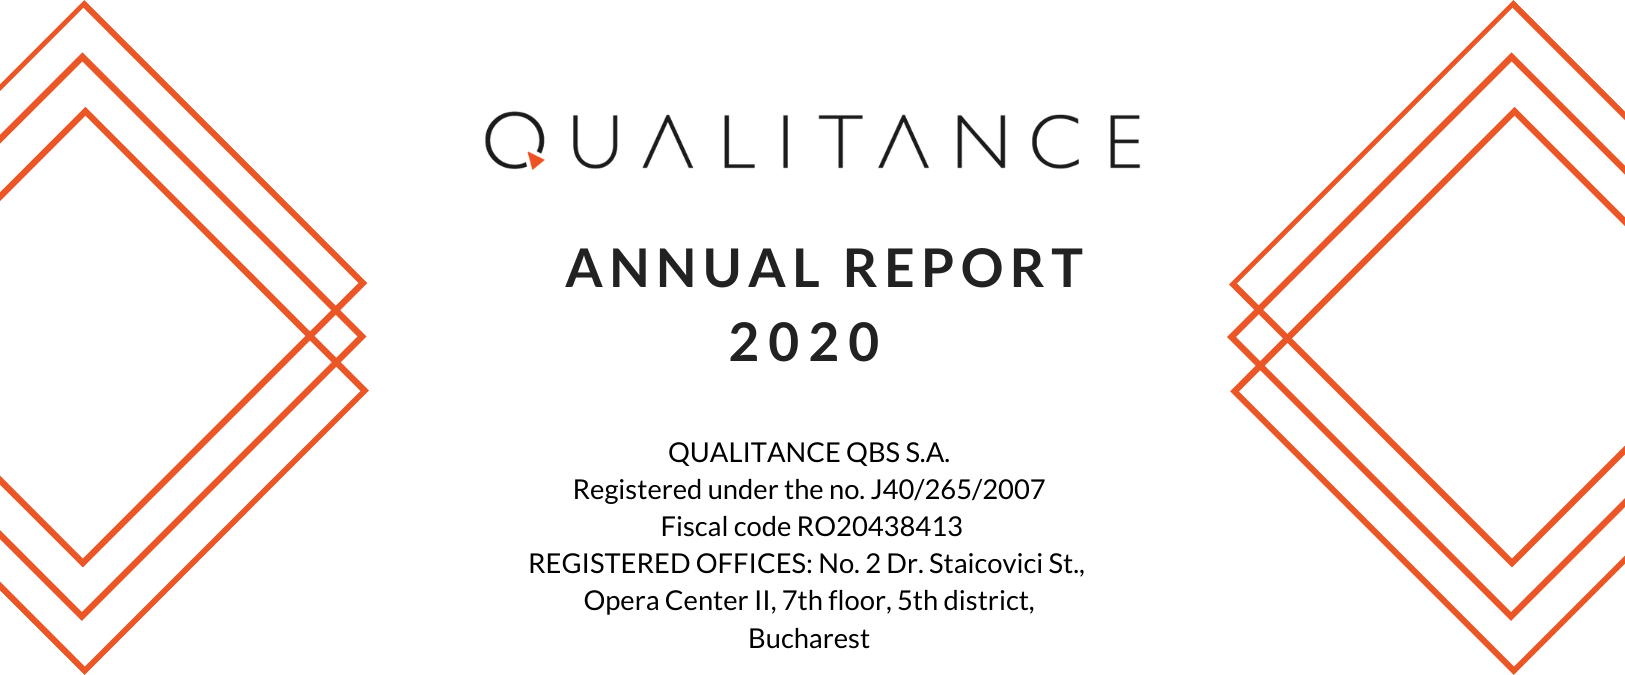 QUALITANCE 2020 Annual Report